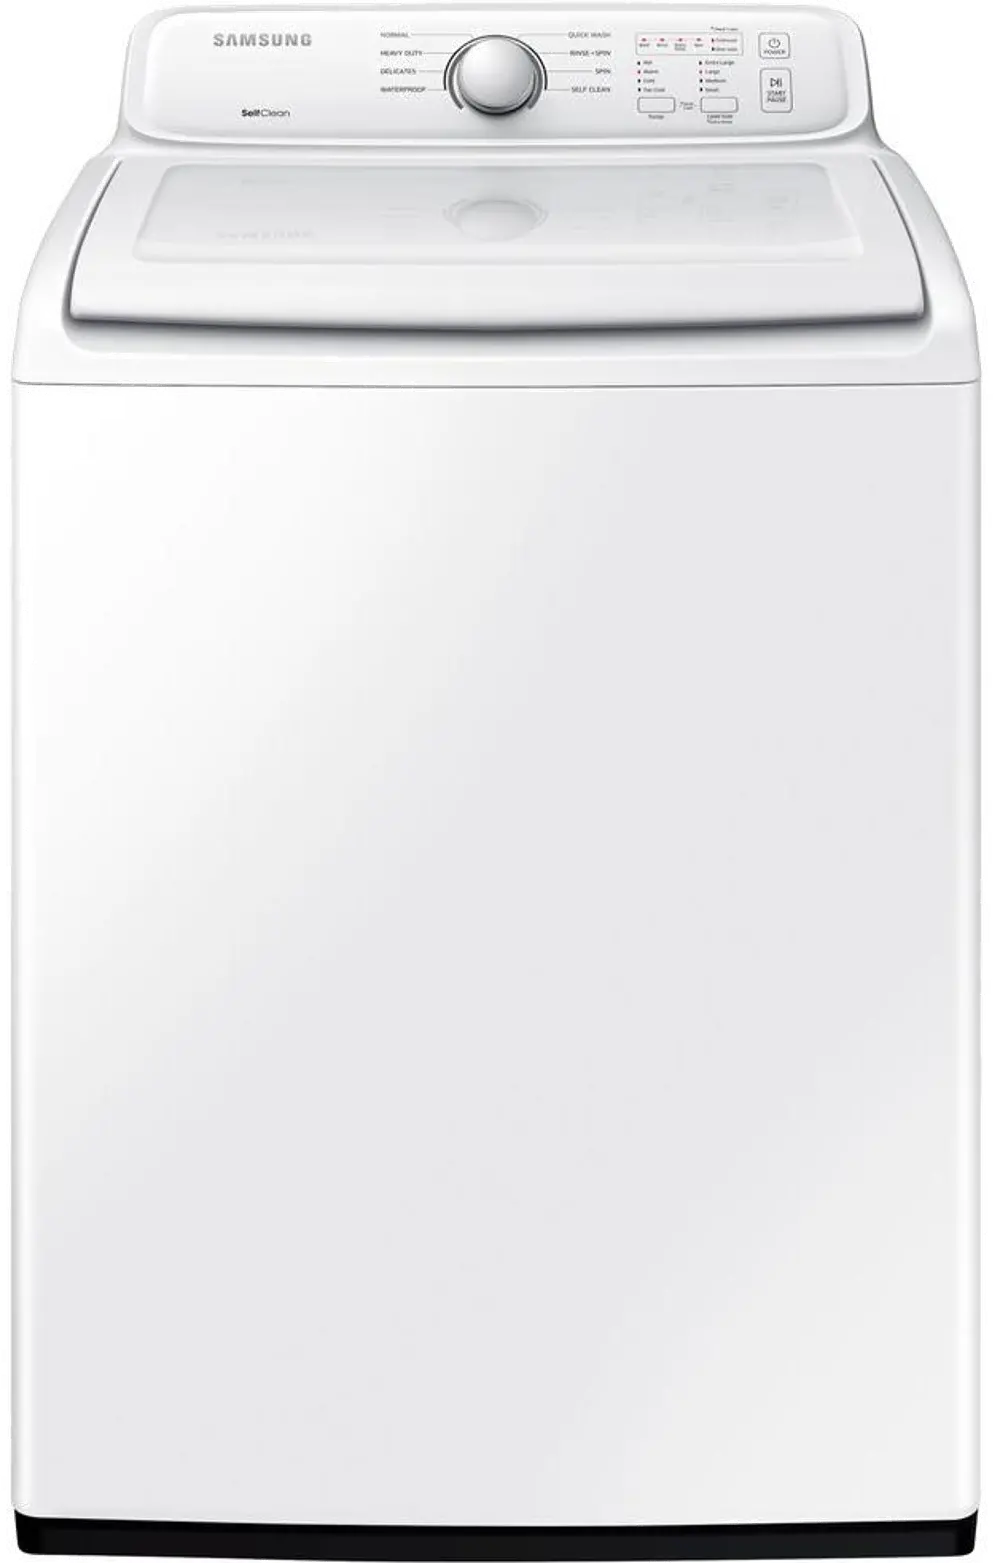 WA40J3000AW Samsung Top Load Washer - 4.0 cu. ft. White-1